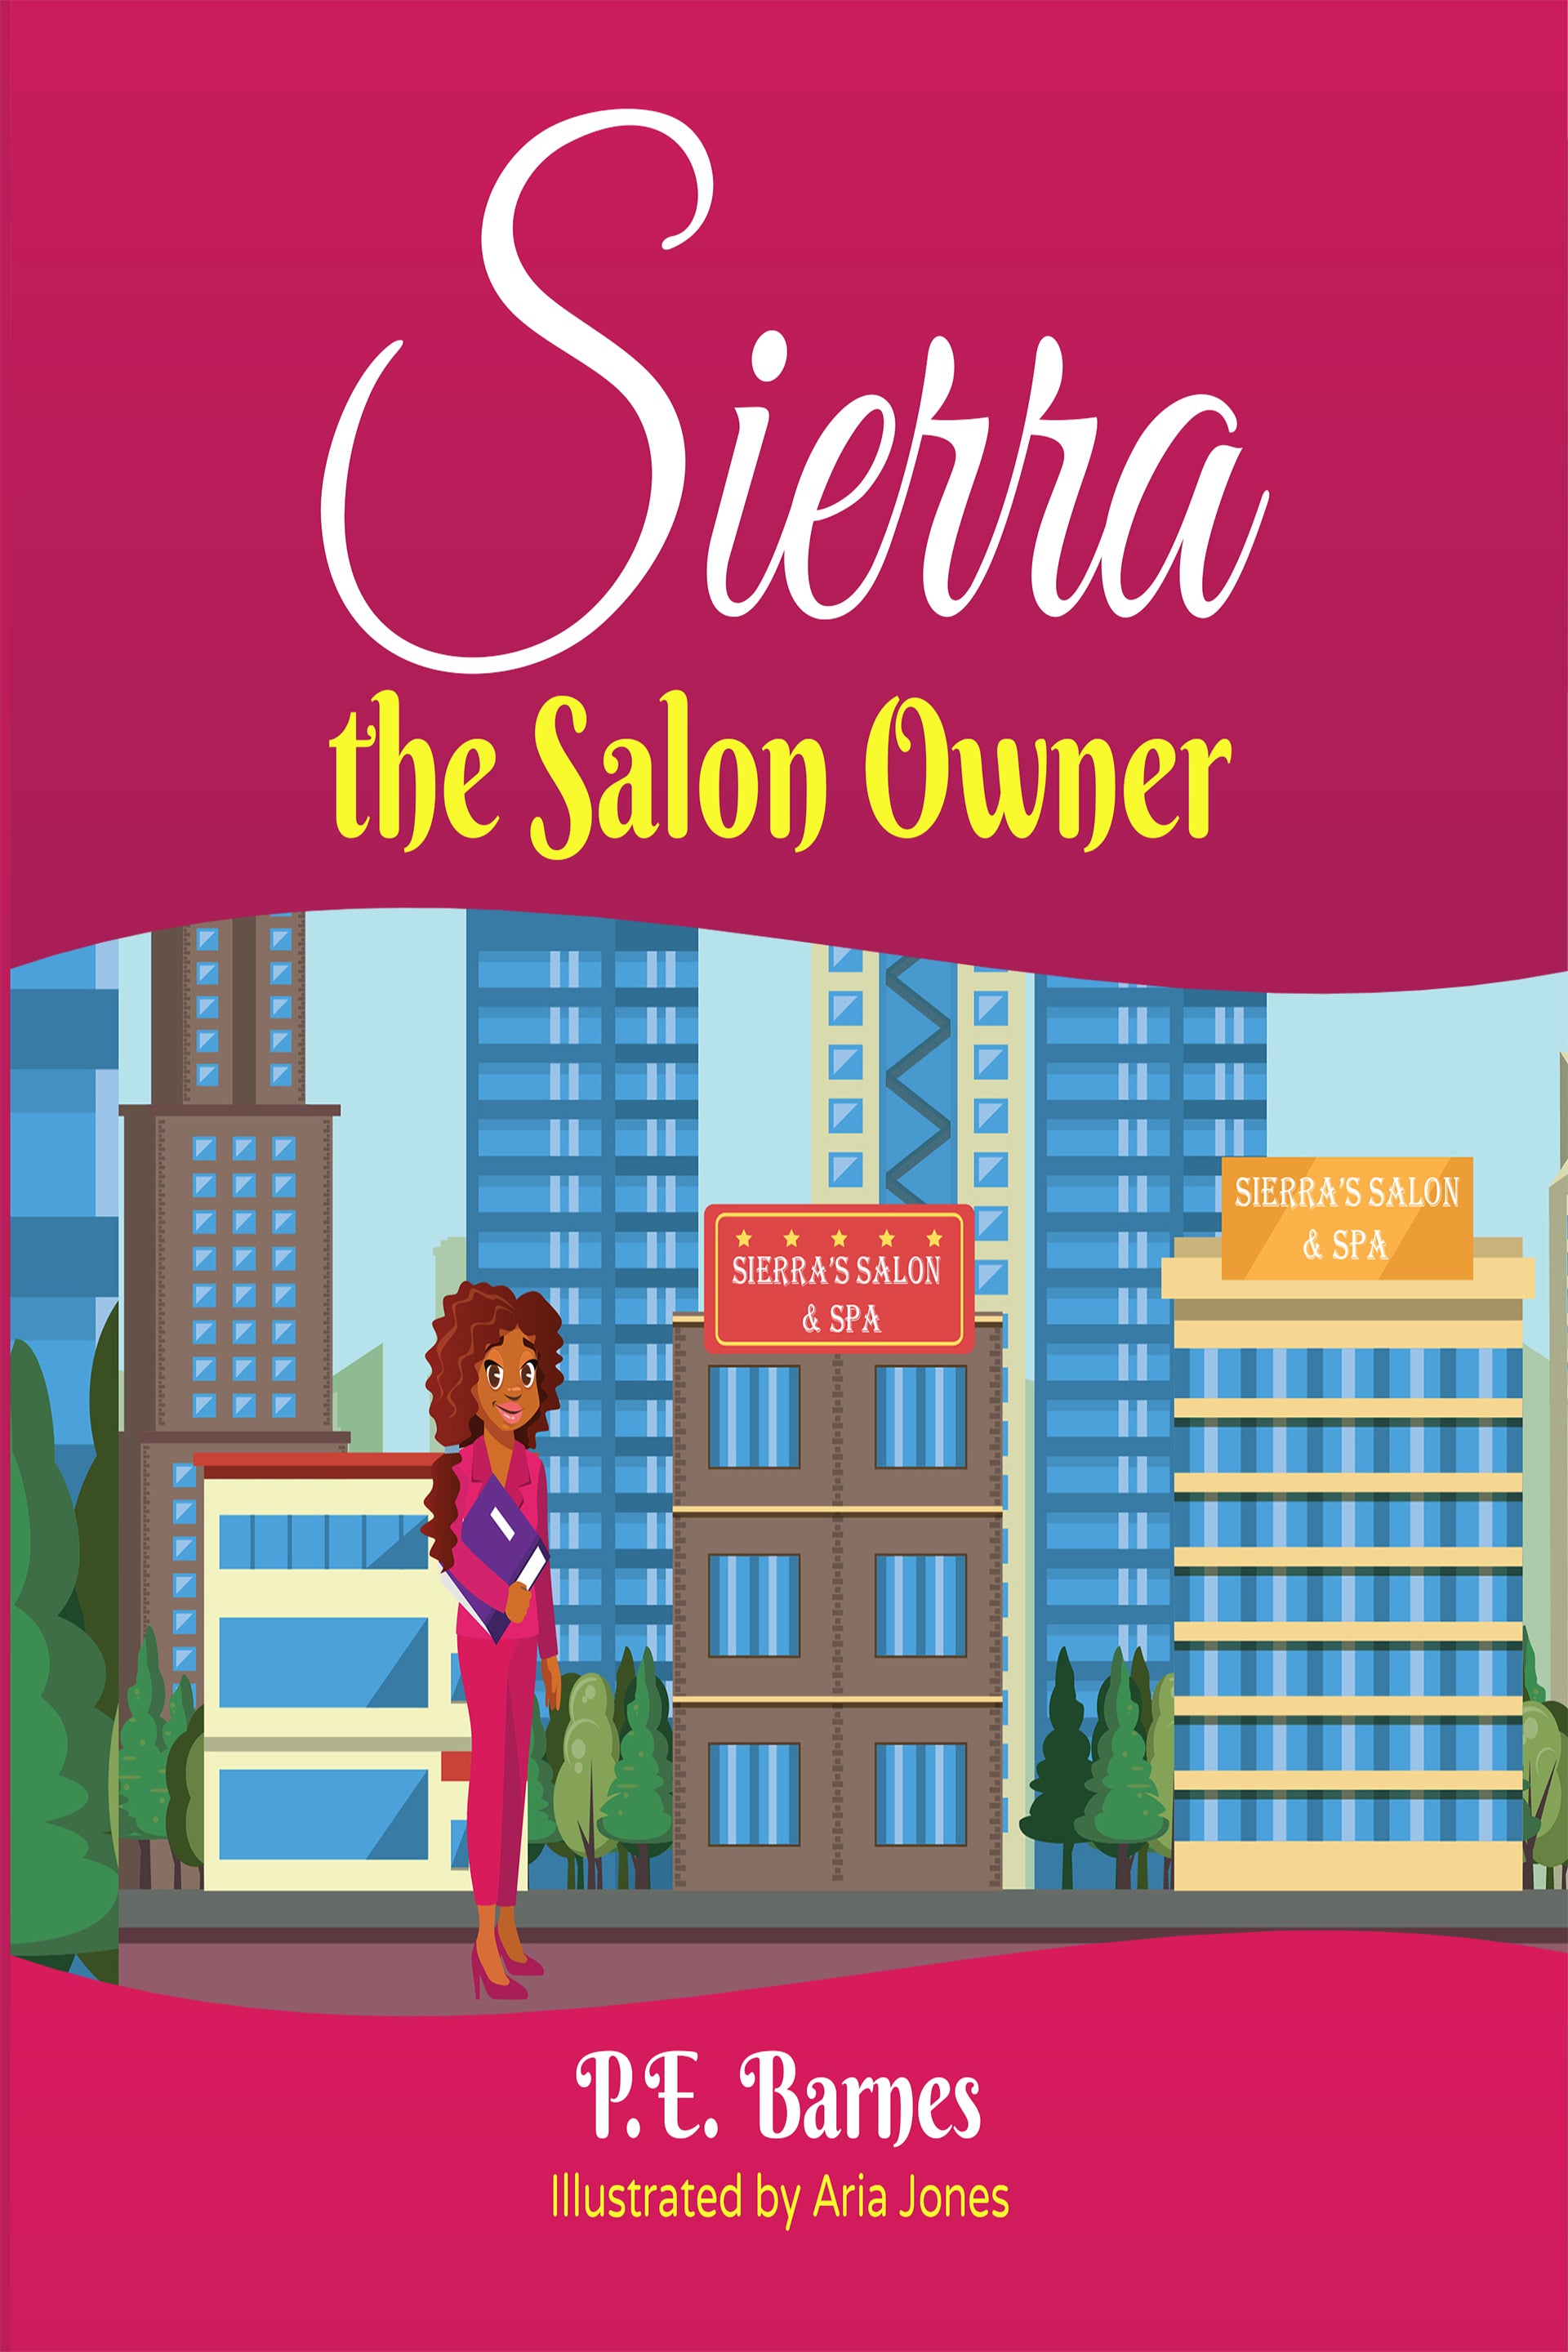 Sierra the Salon Owner (Ages 6-12) ⭐️⭐️⭐️⭐️⭐️